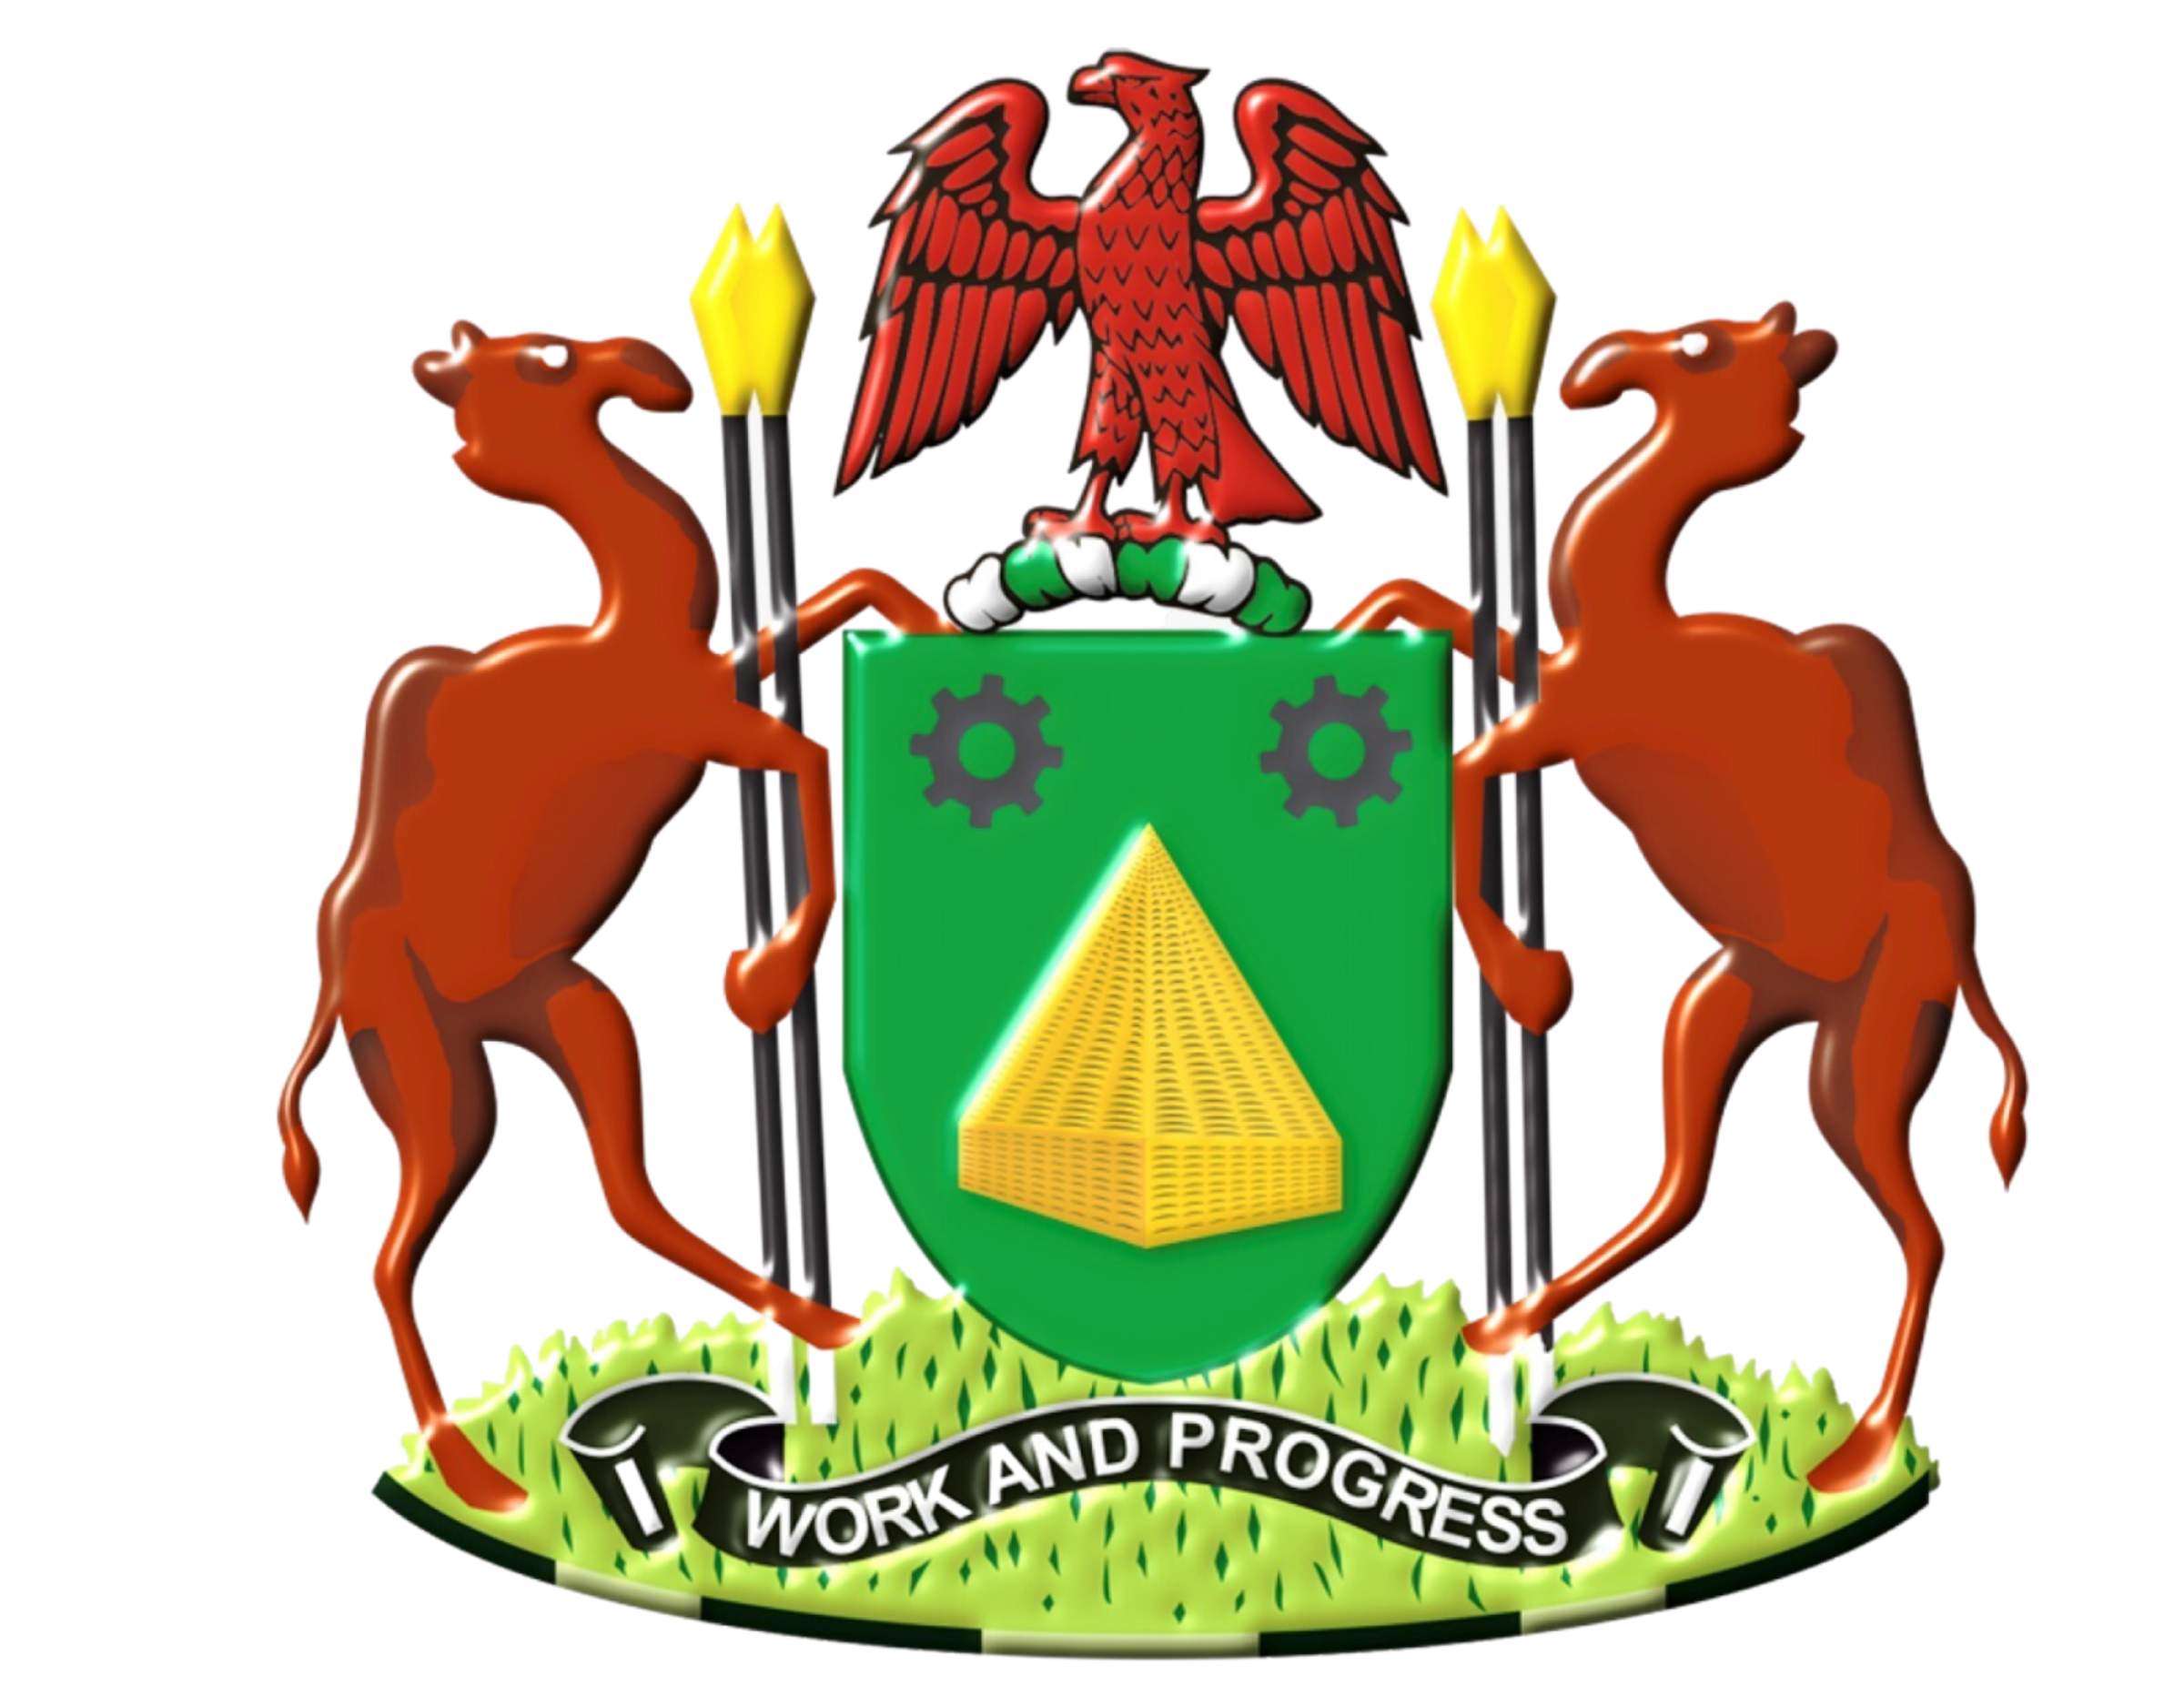 The flag of Kano, Nigeria